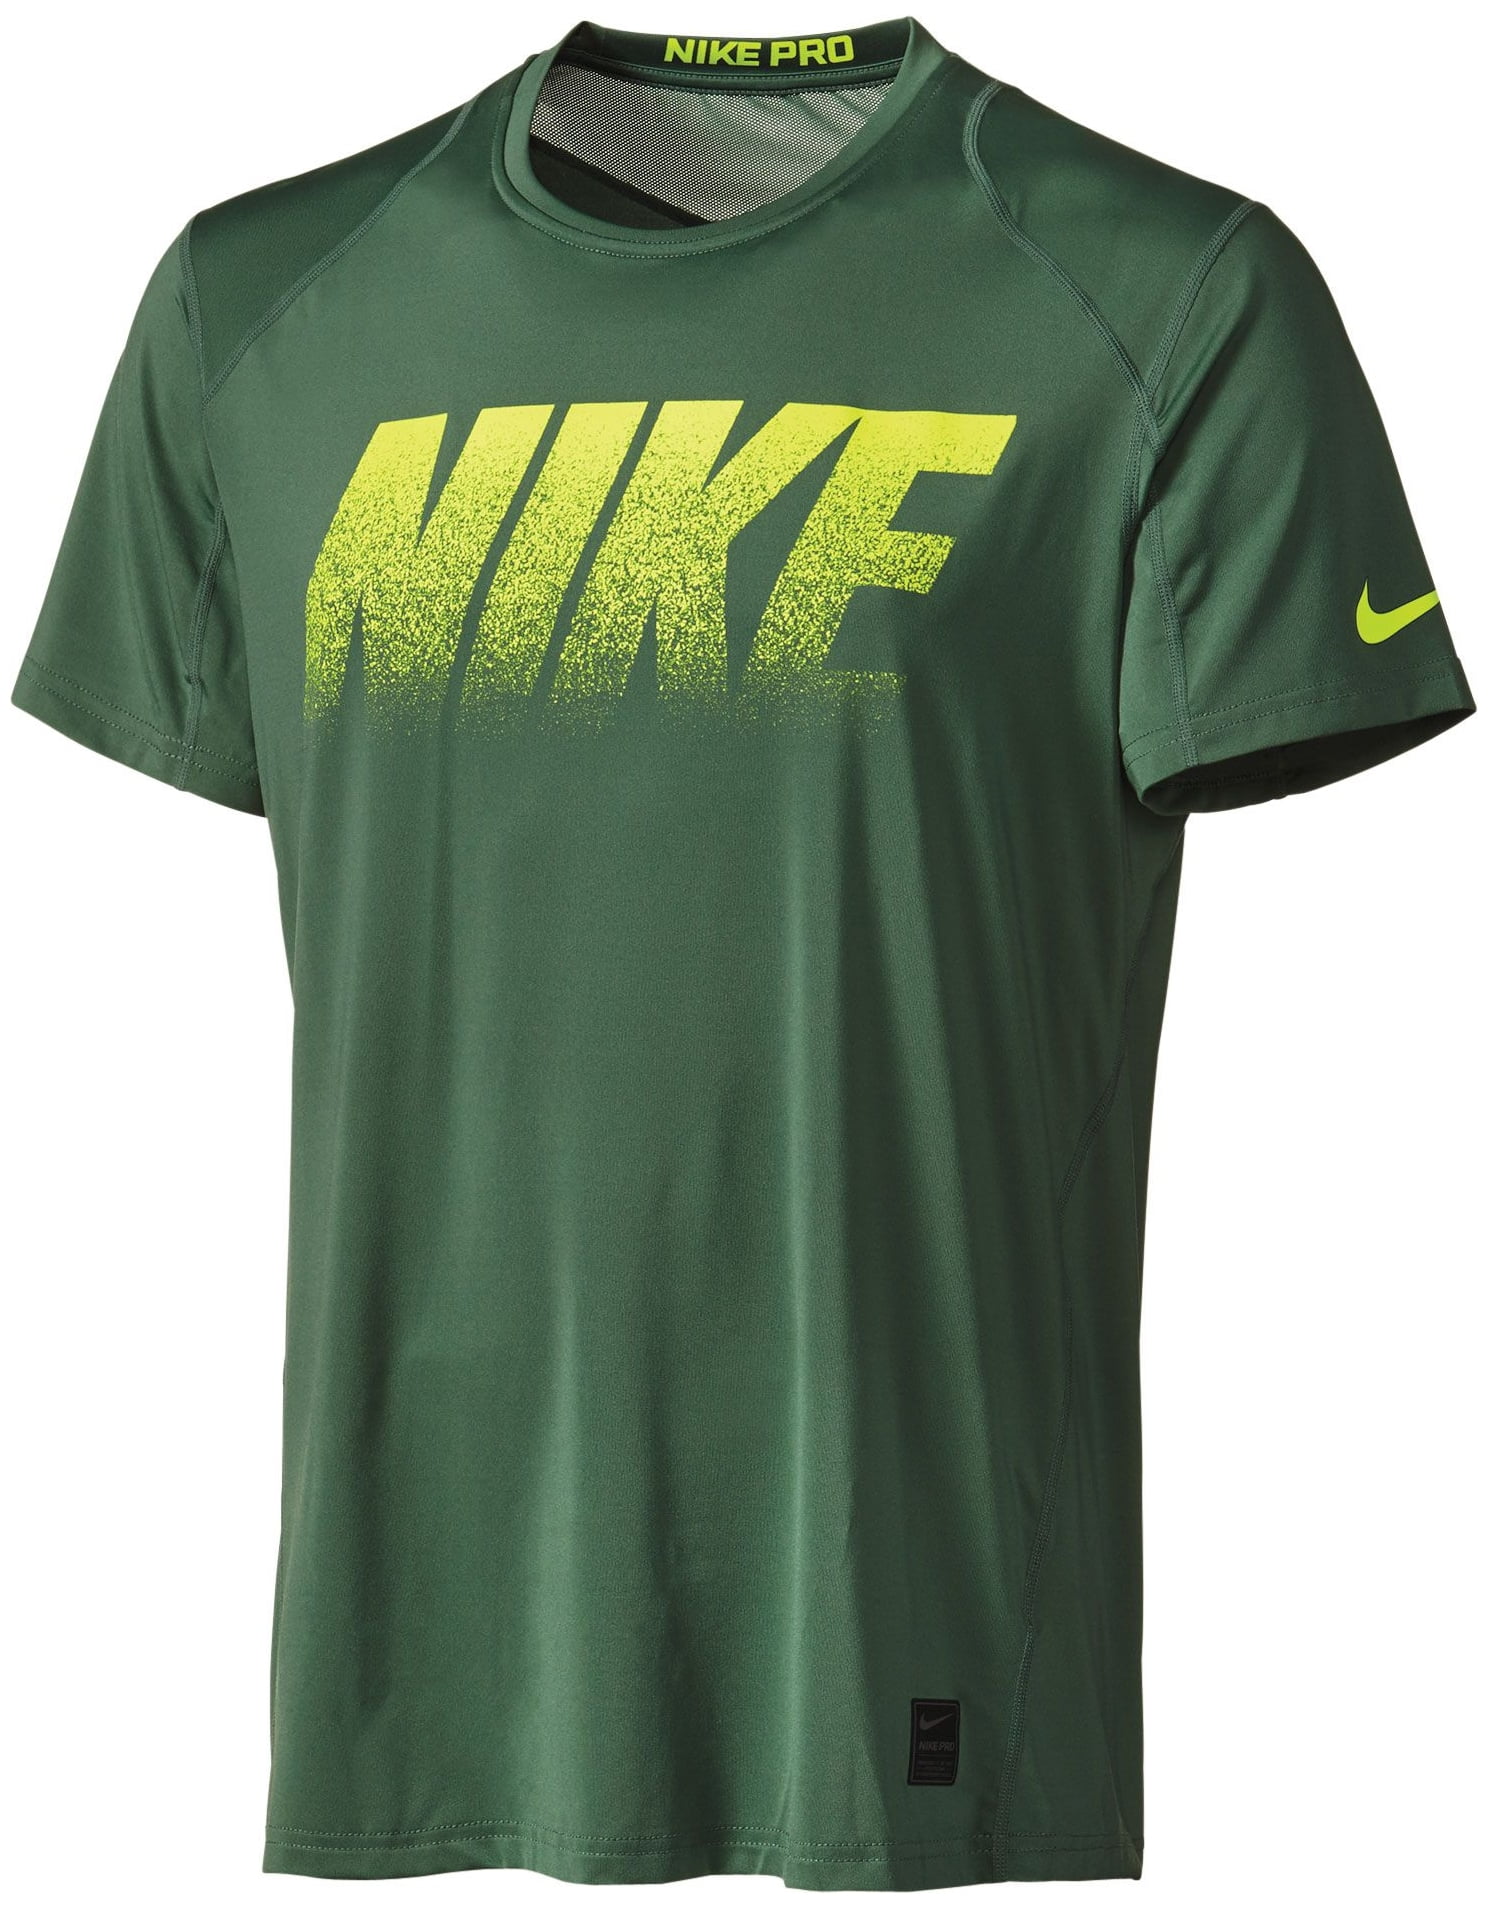 Nike - Nike Men's Pro Cool Talistatic Graphic T-Shirt - Walmart.com ...